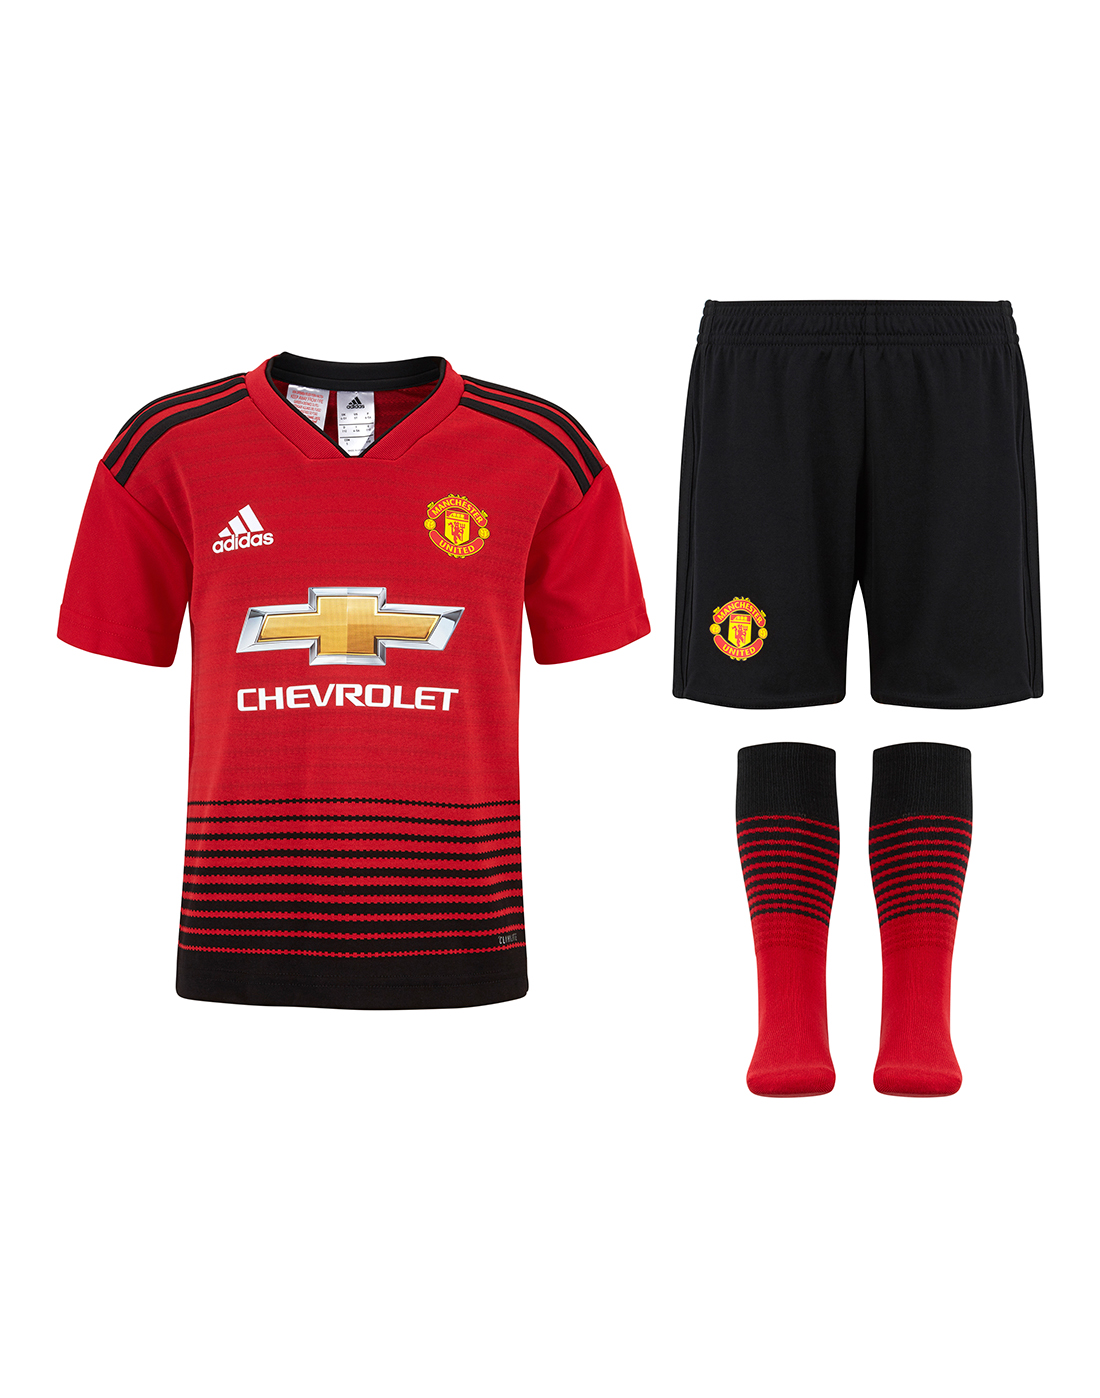 man united home kit